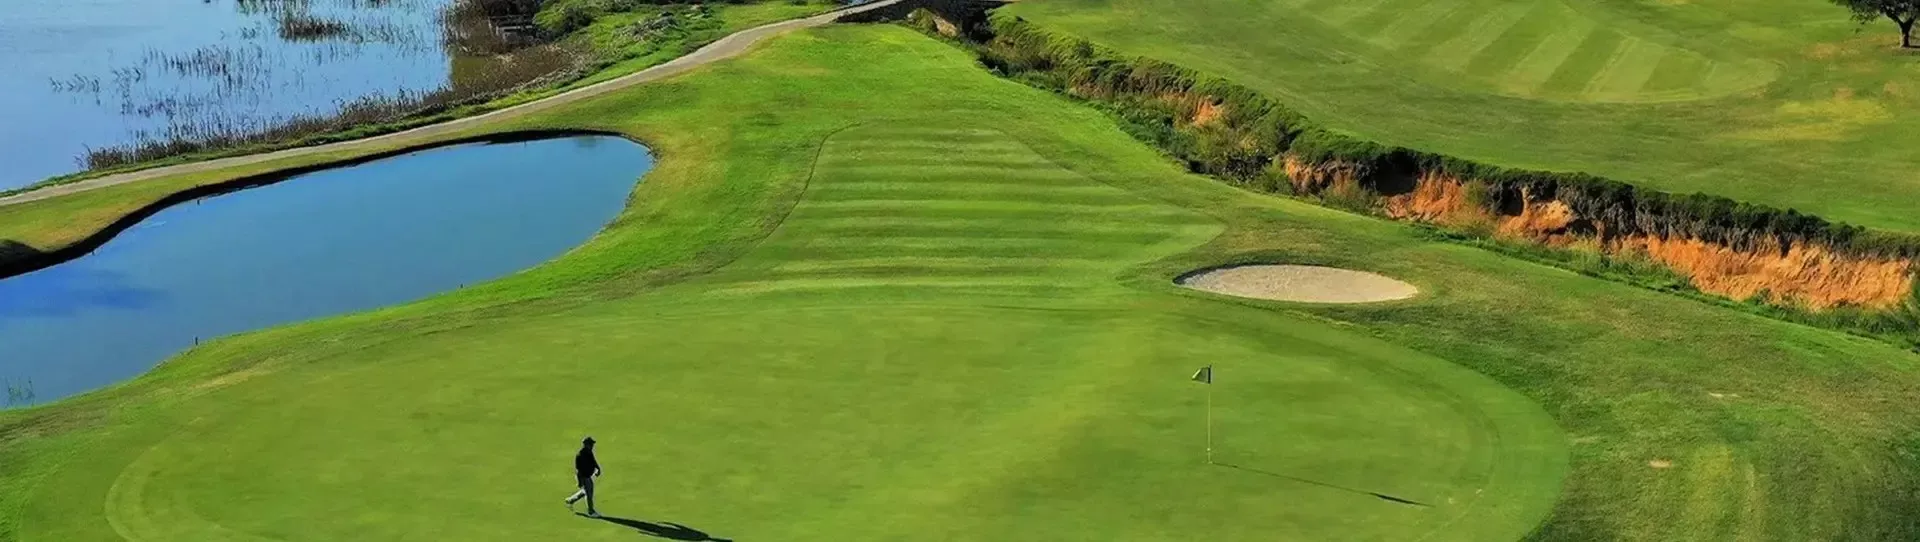 Spain golf courses - La Finca Golf Course - Photo 2